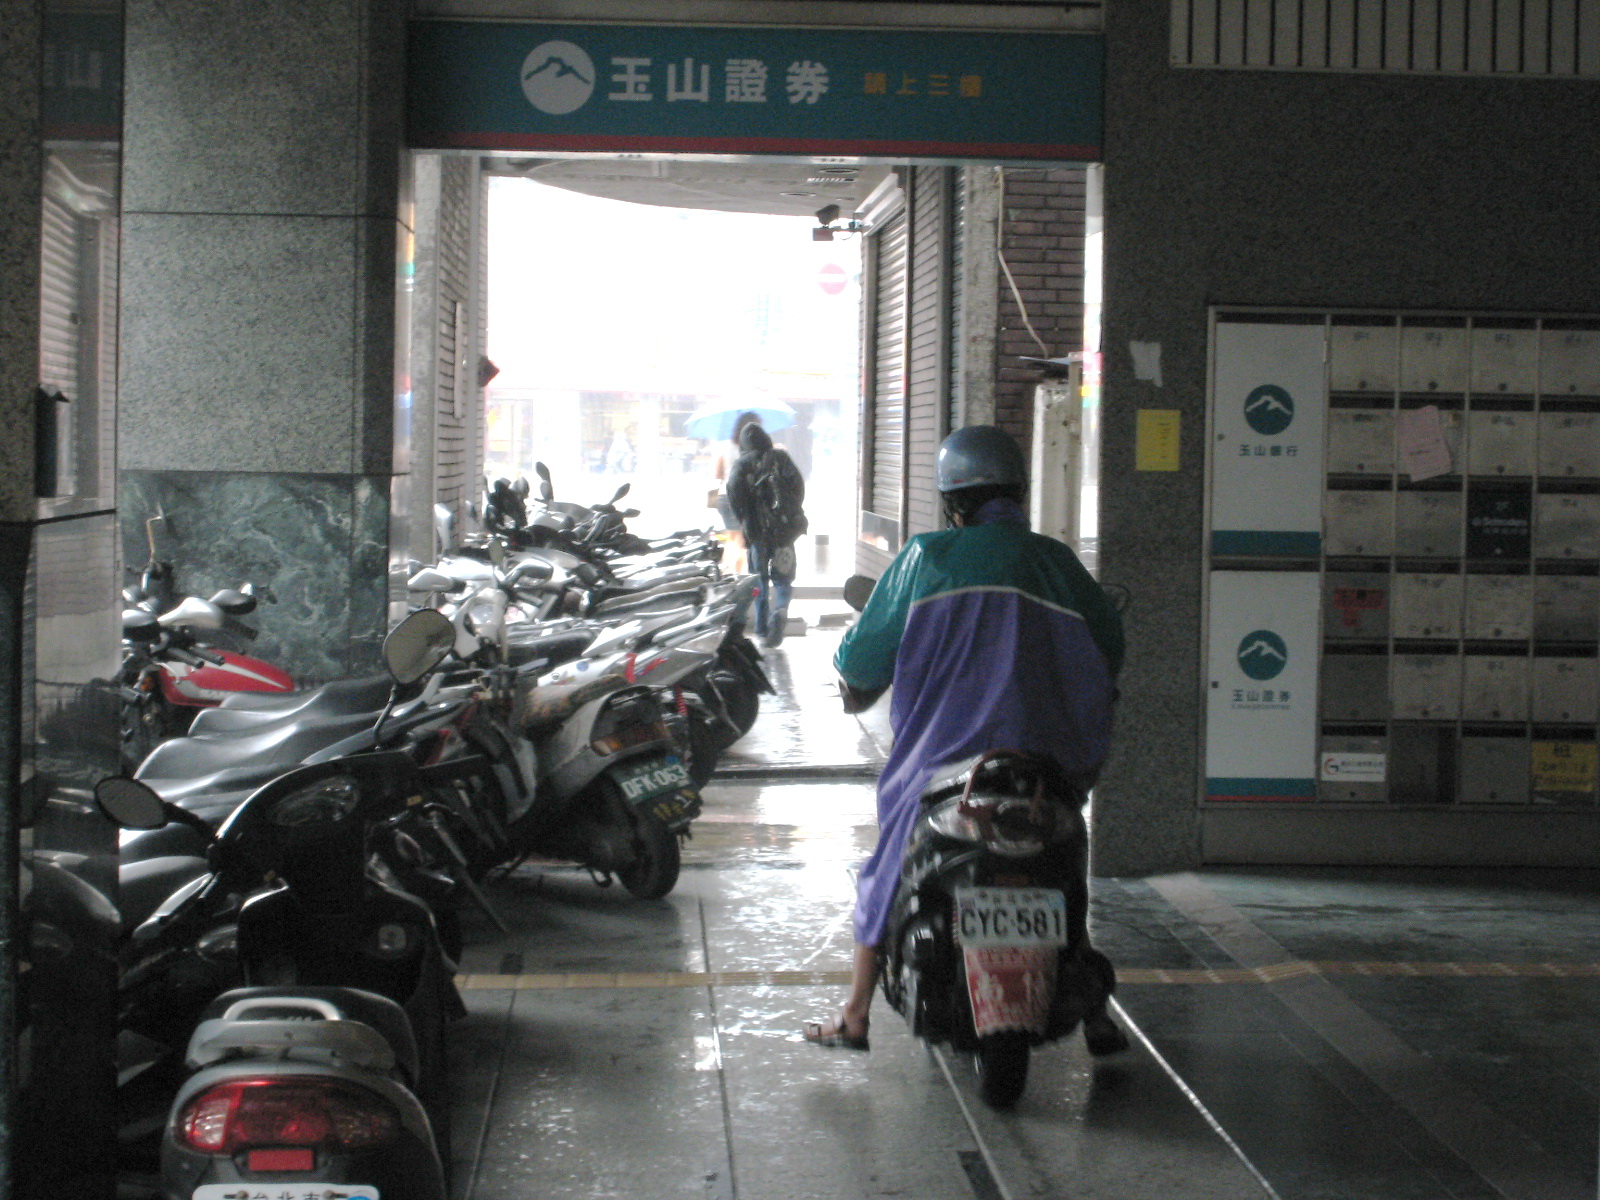 Before implementation, Wuchang Street